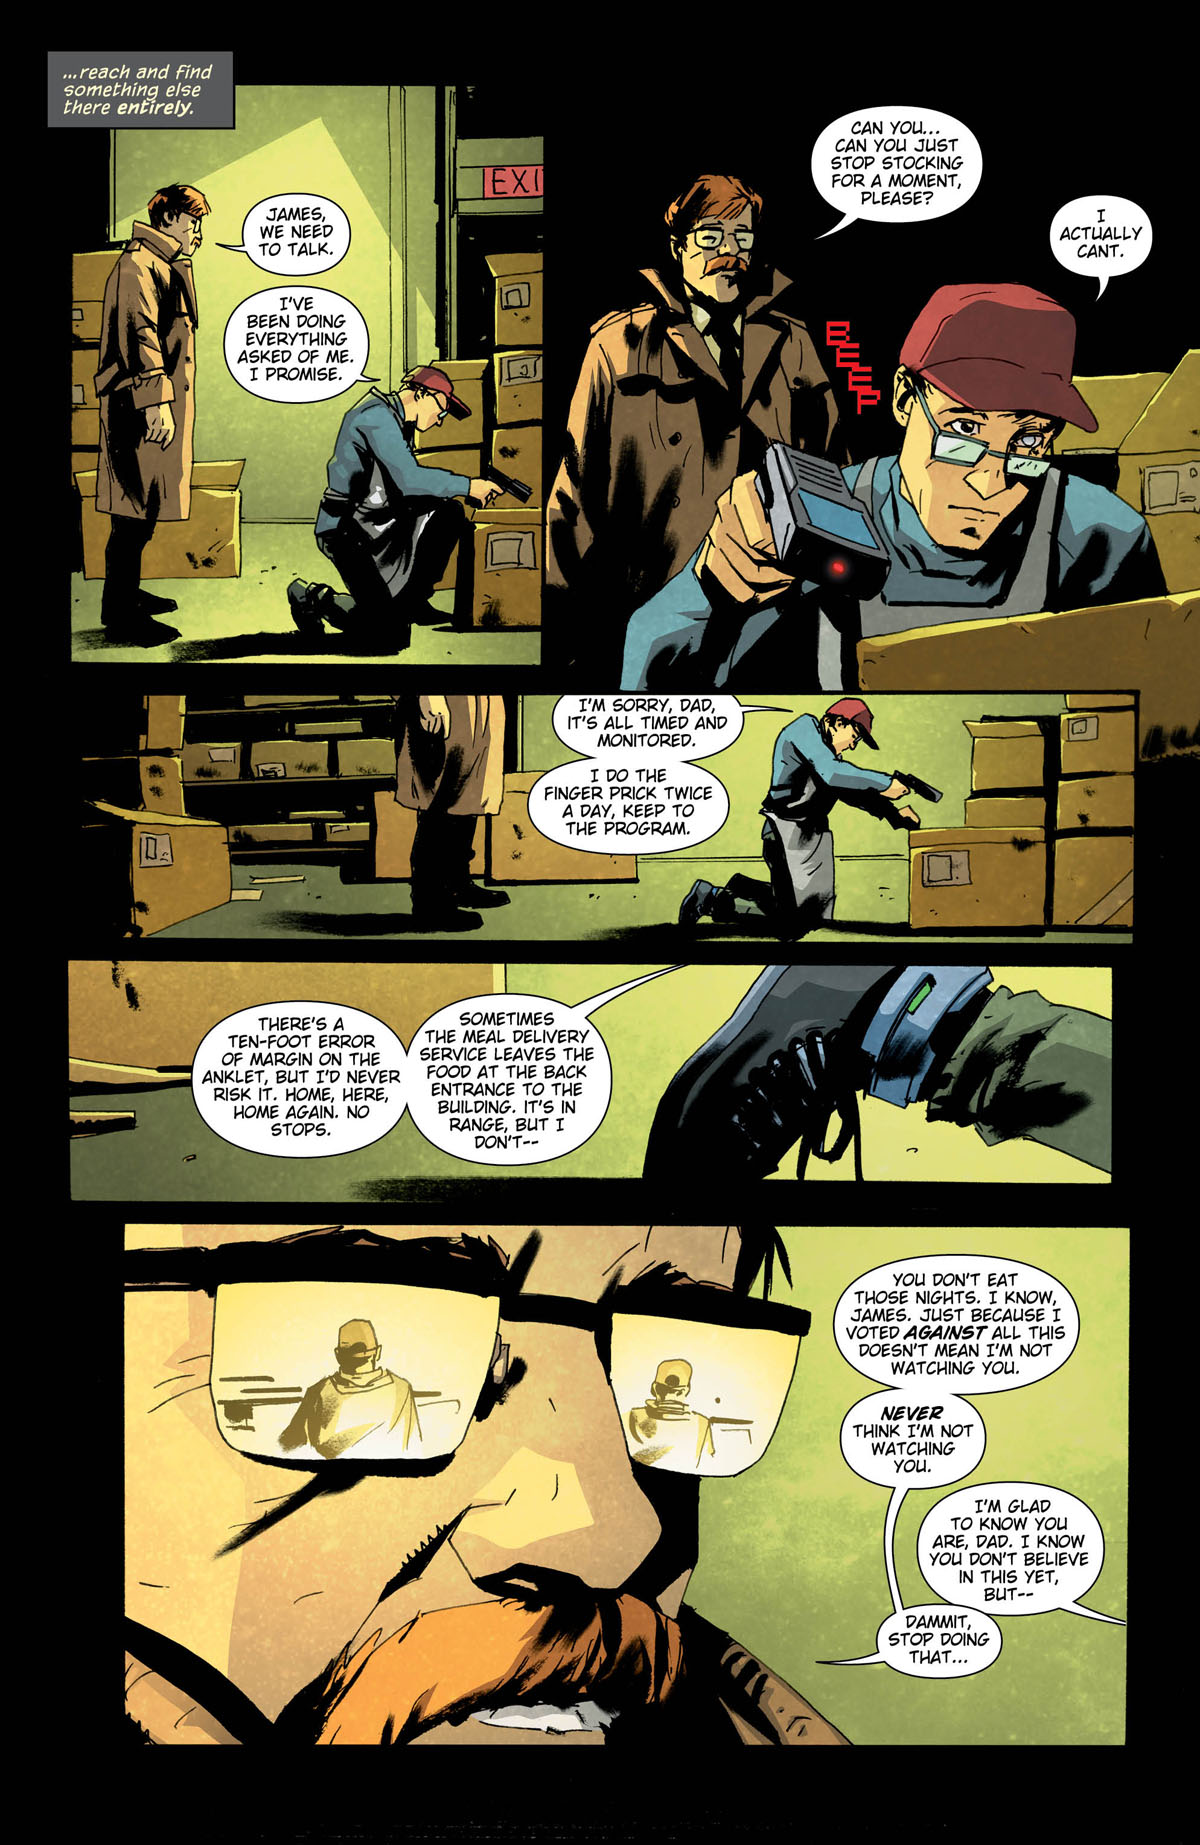 The Batman Who Laughs #3 page 2